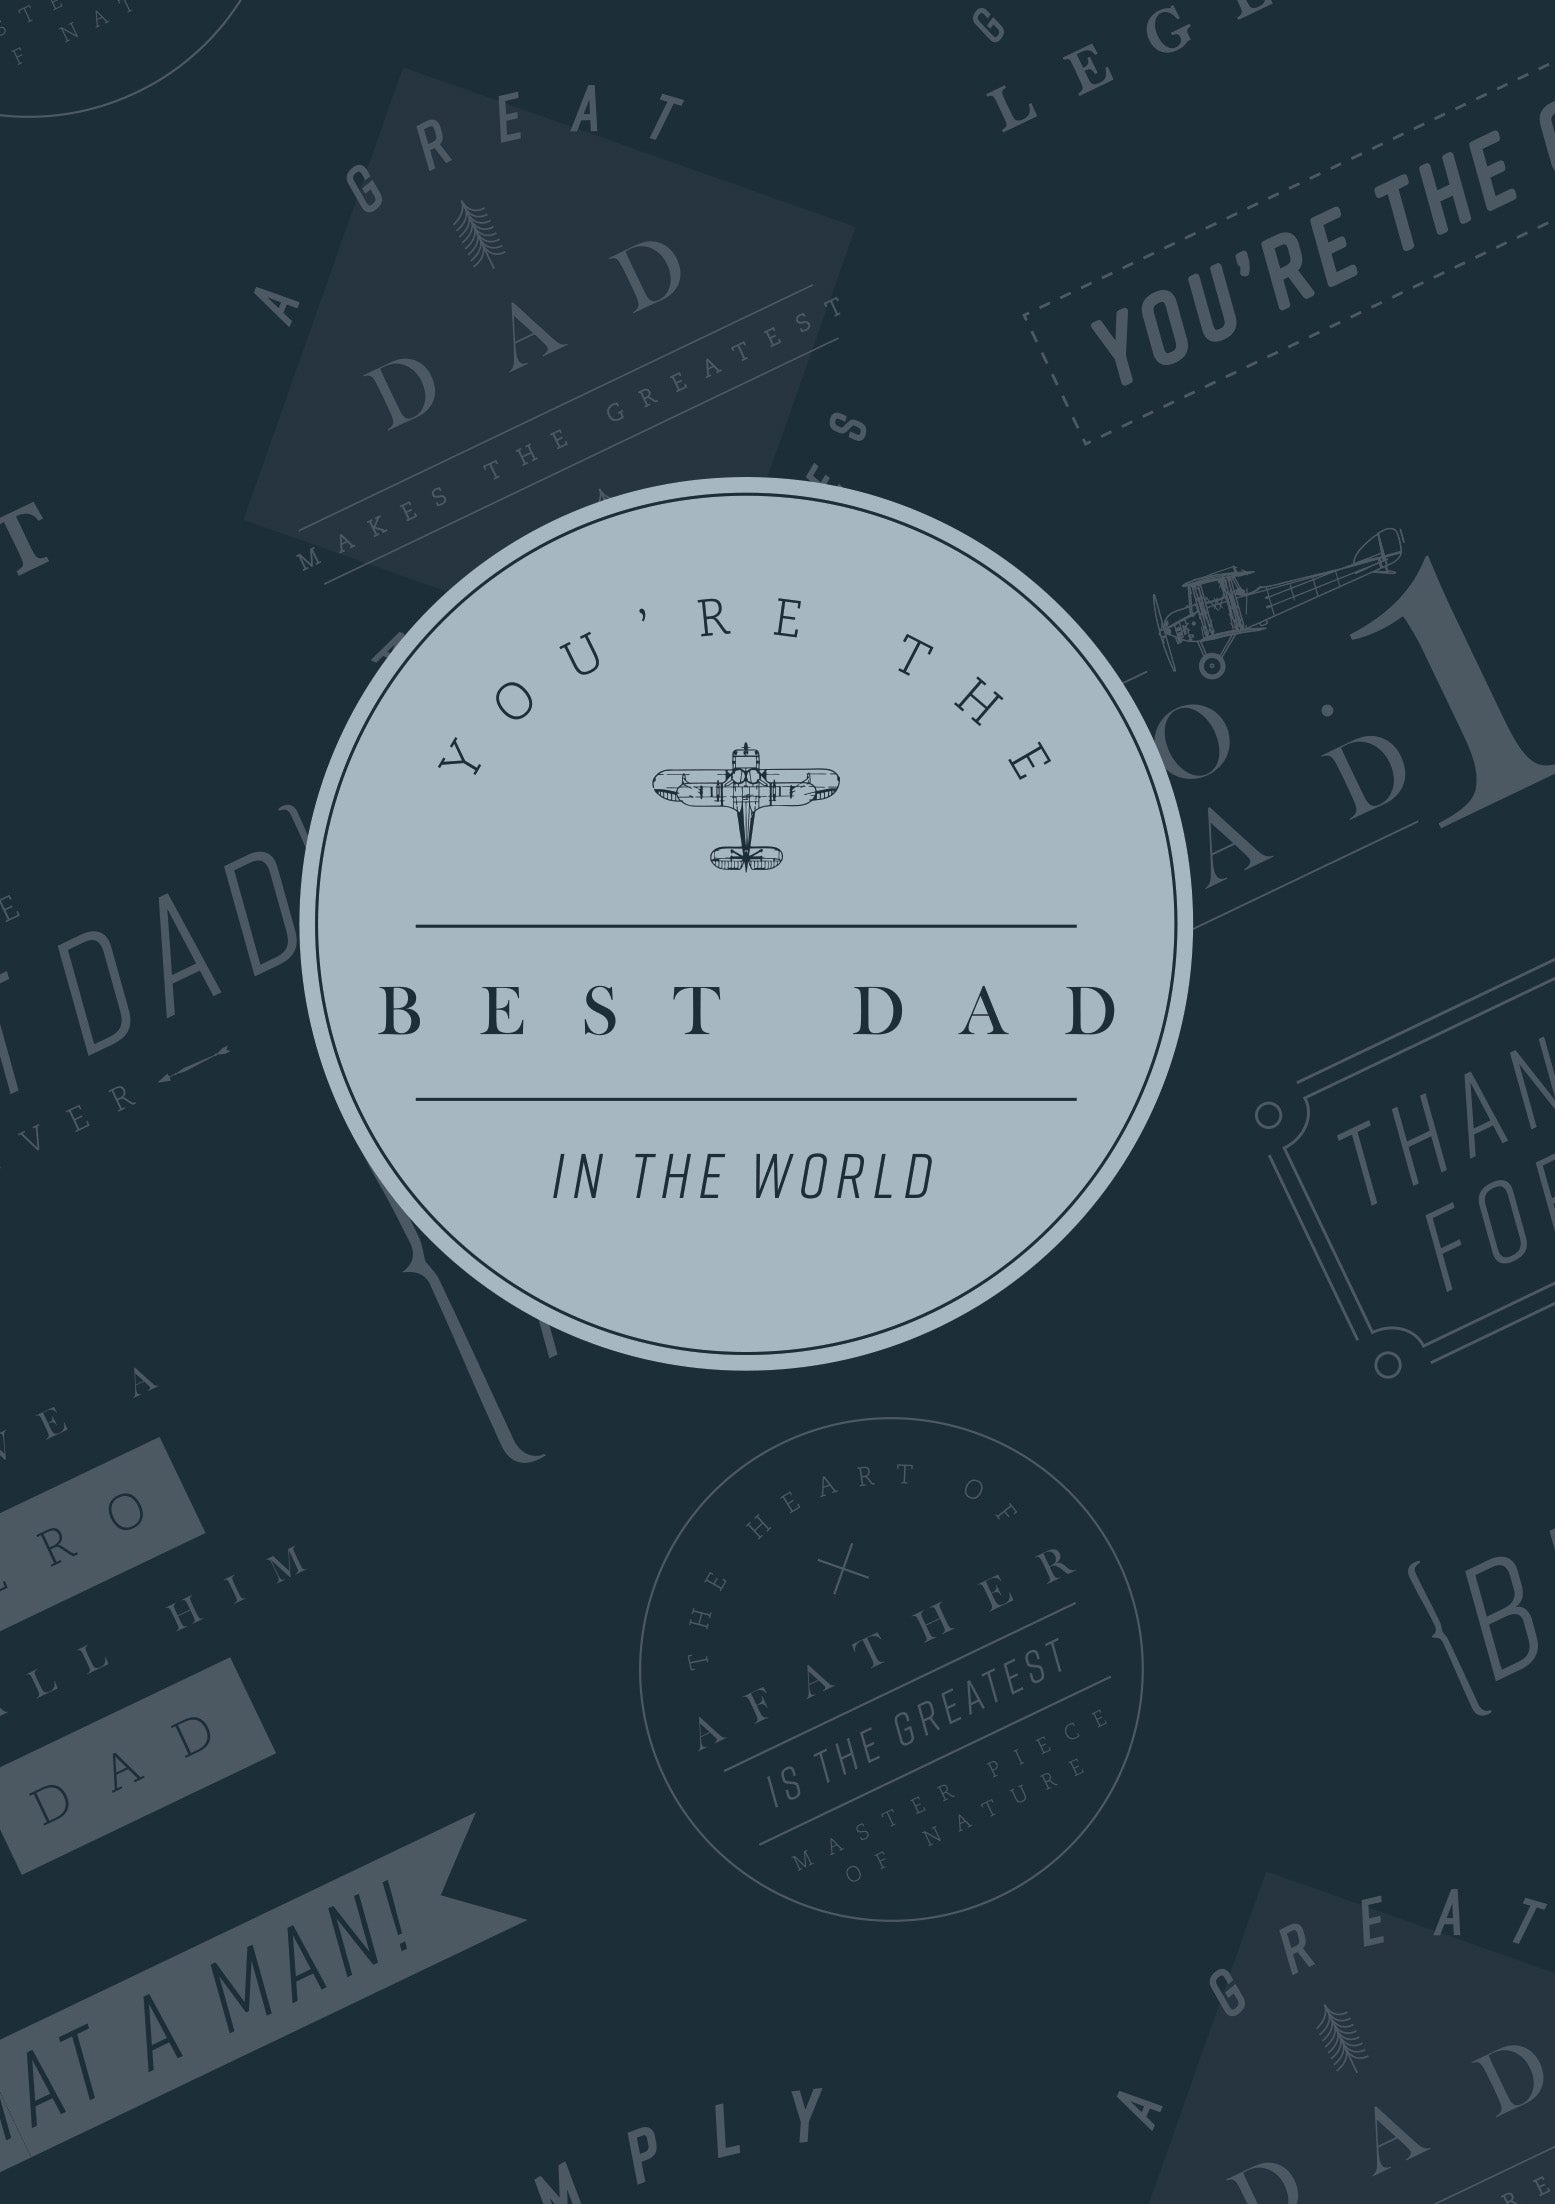 Greeting Card - Best Dad